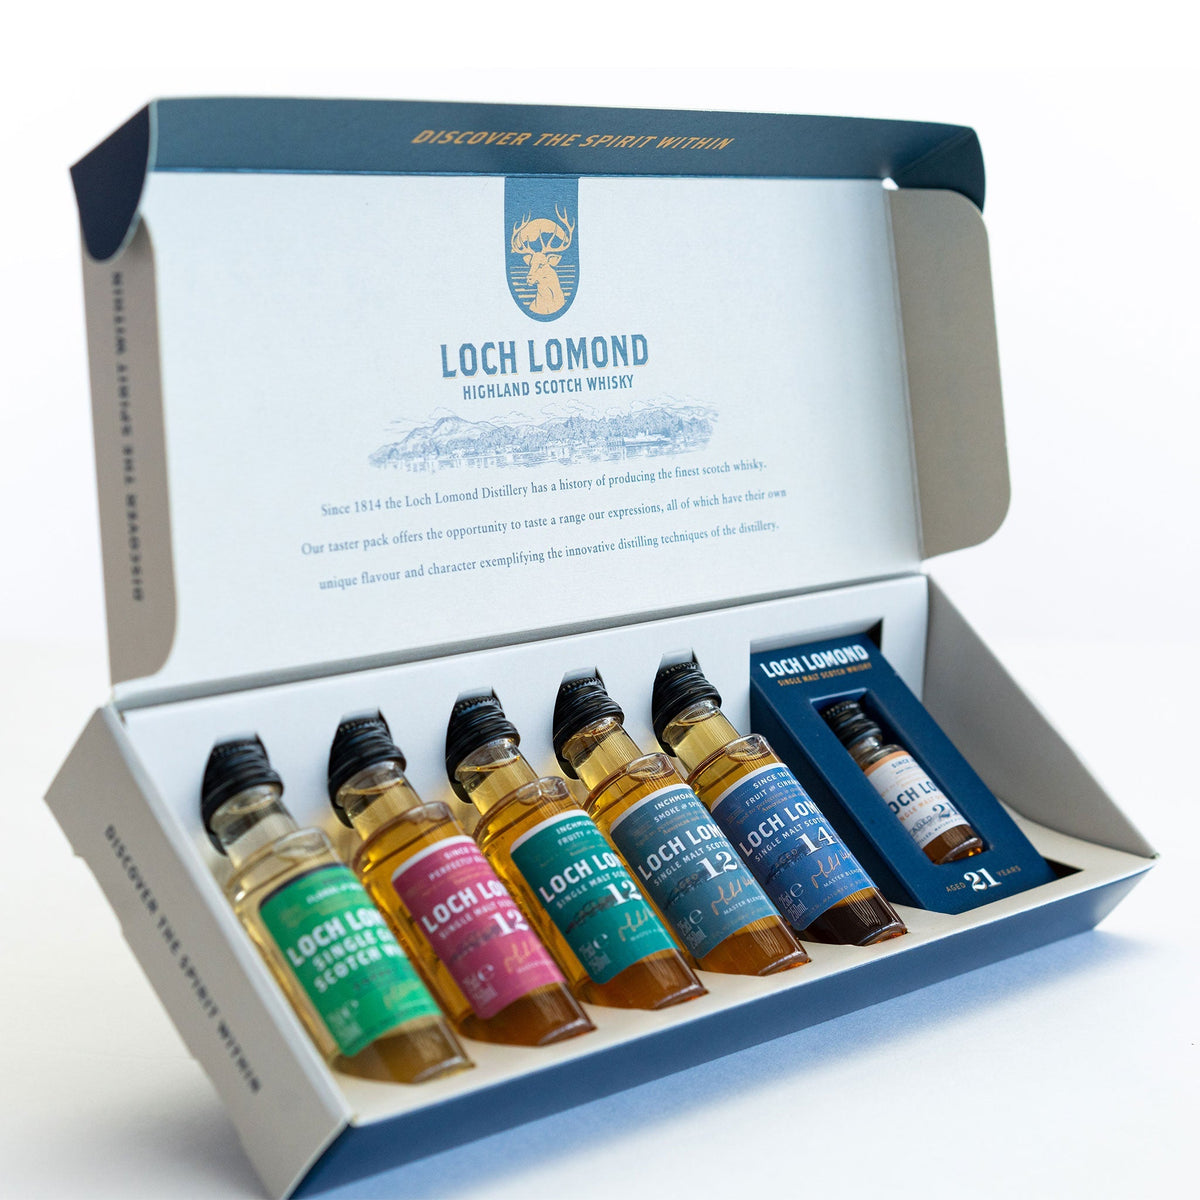 Whisky tasting gift set - Loch Lomond Group